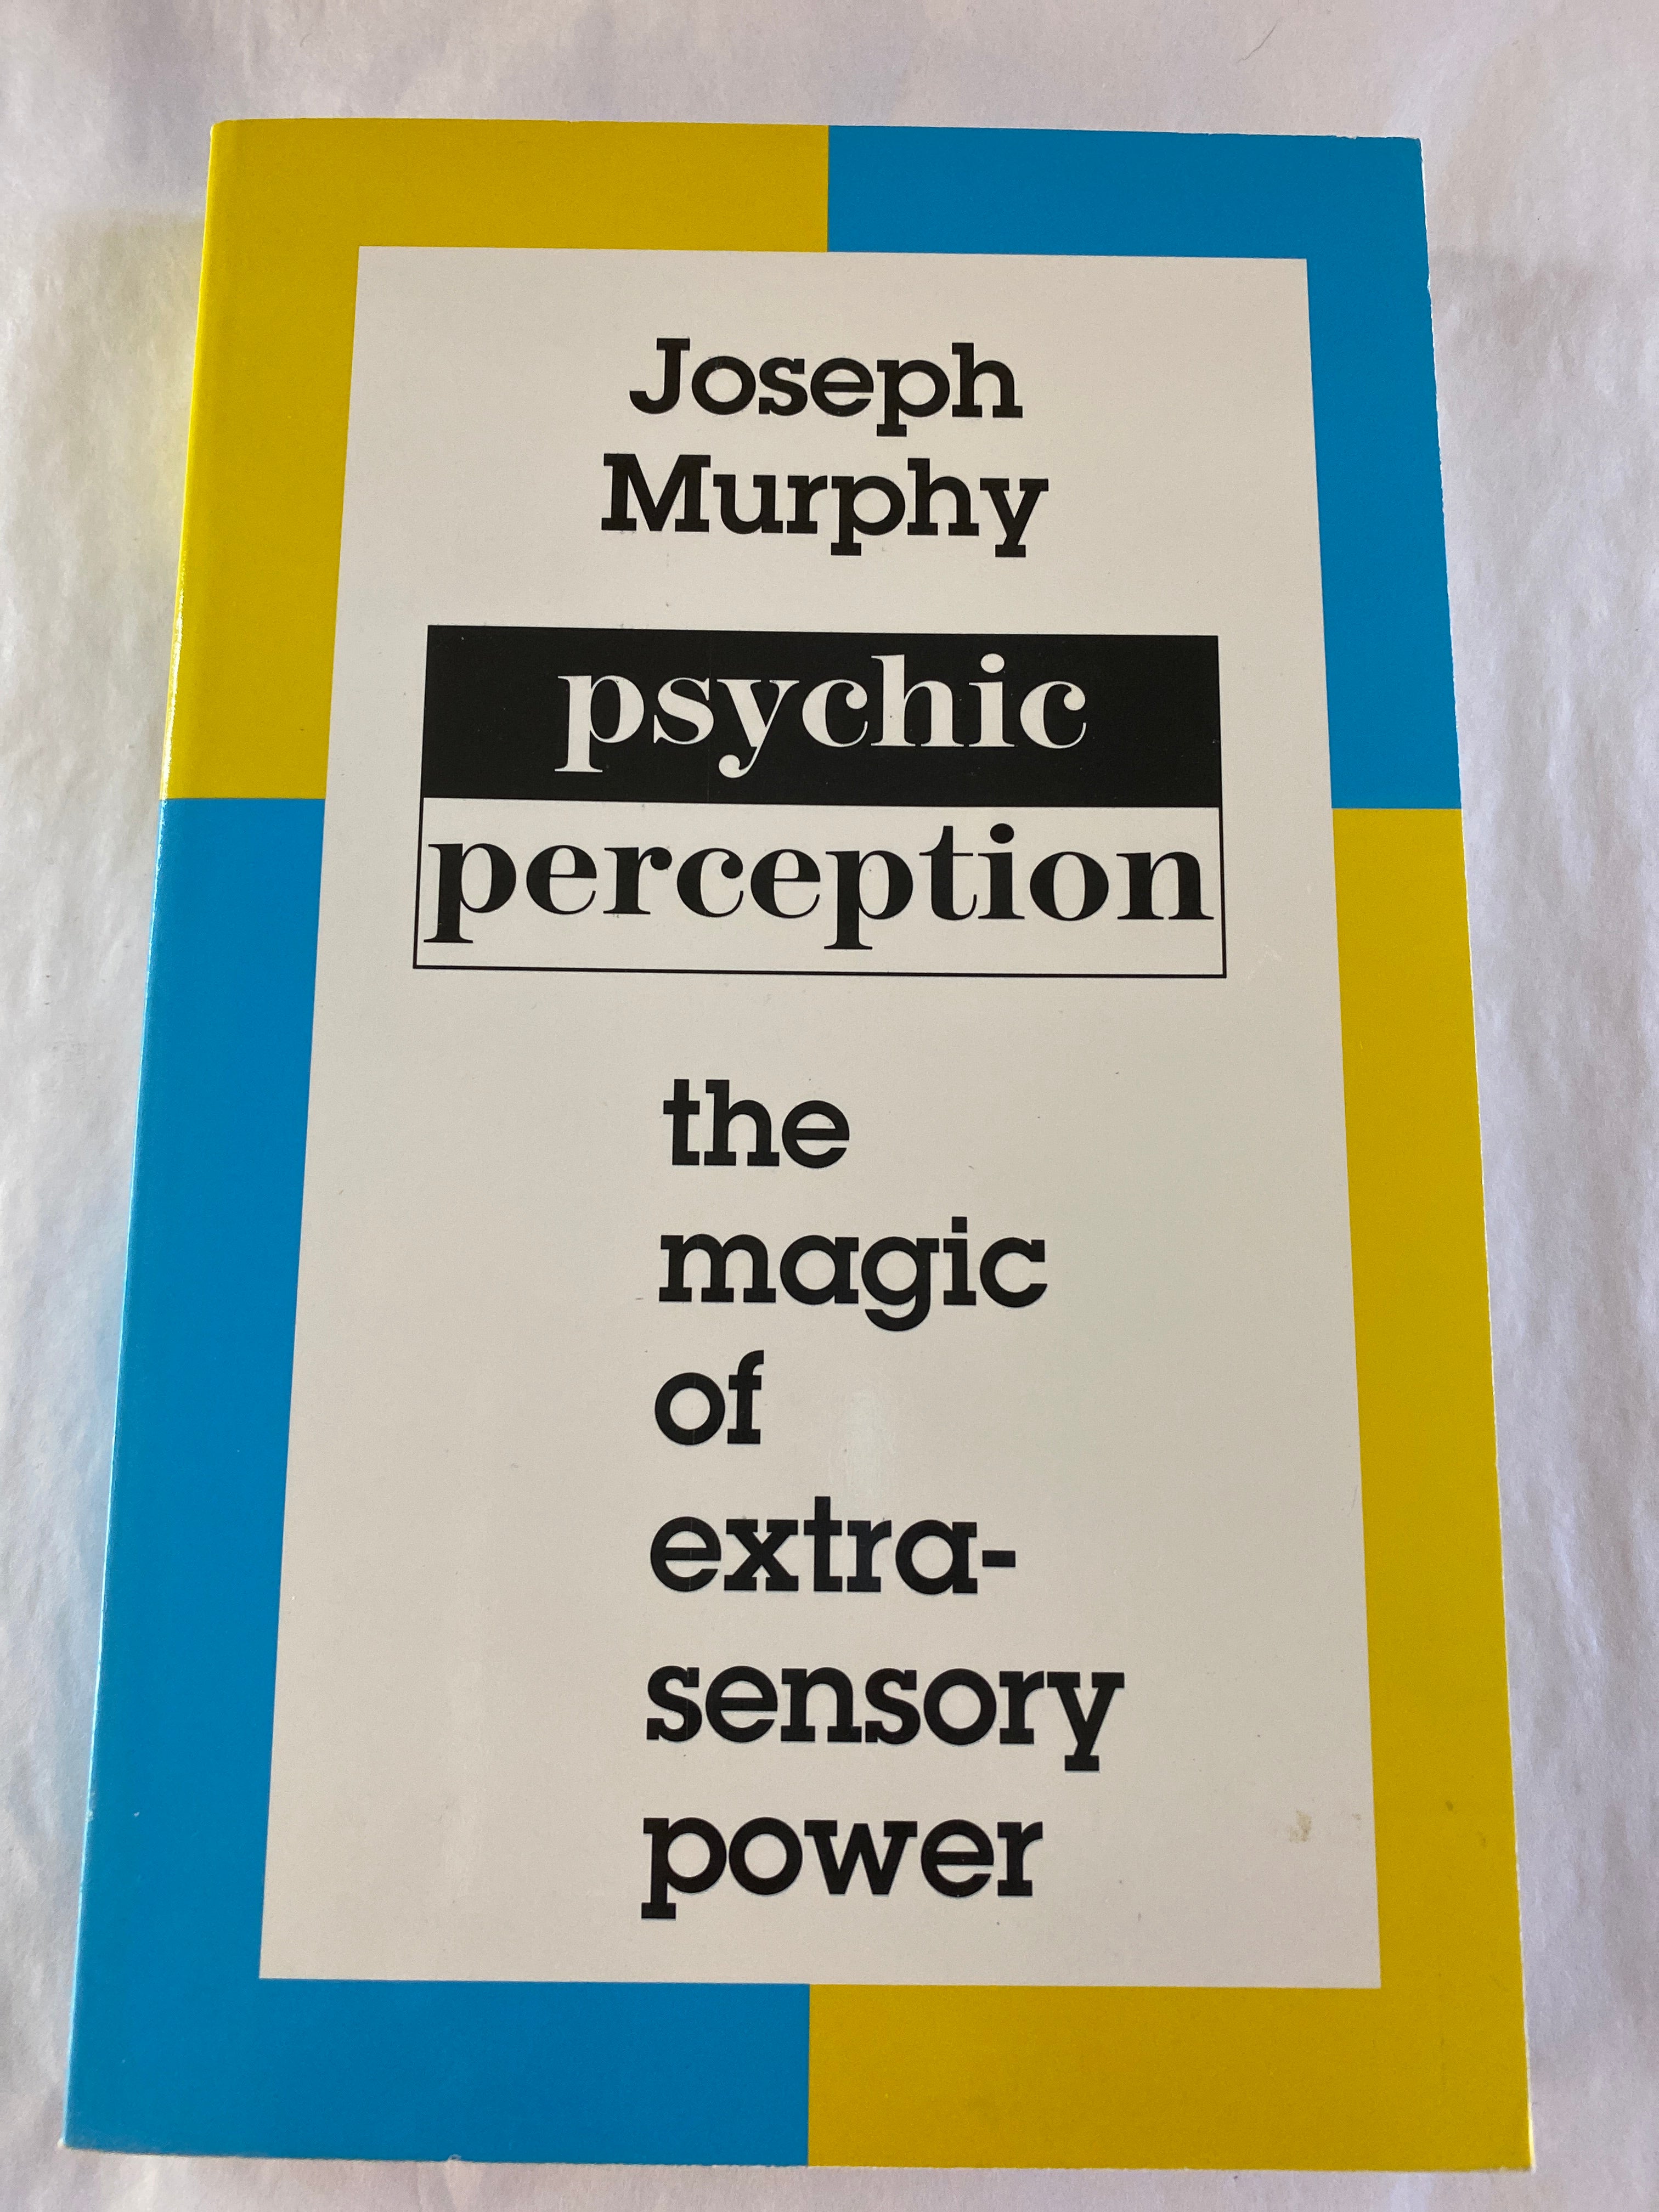 Psychic Perception